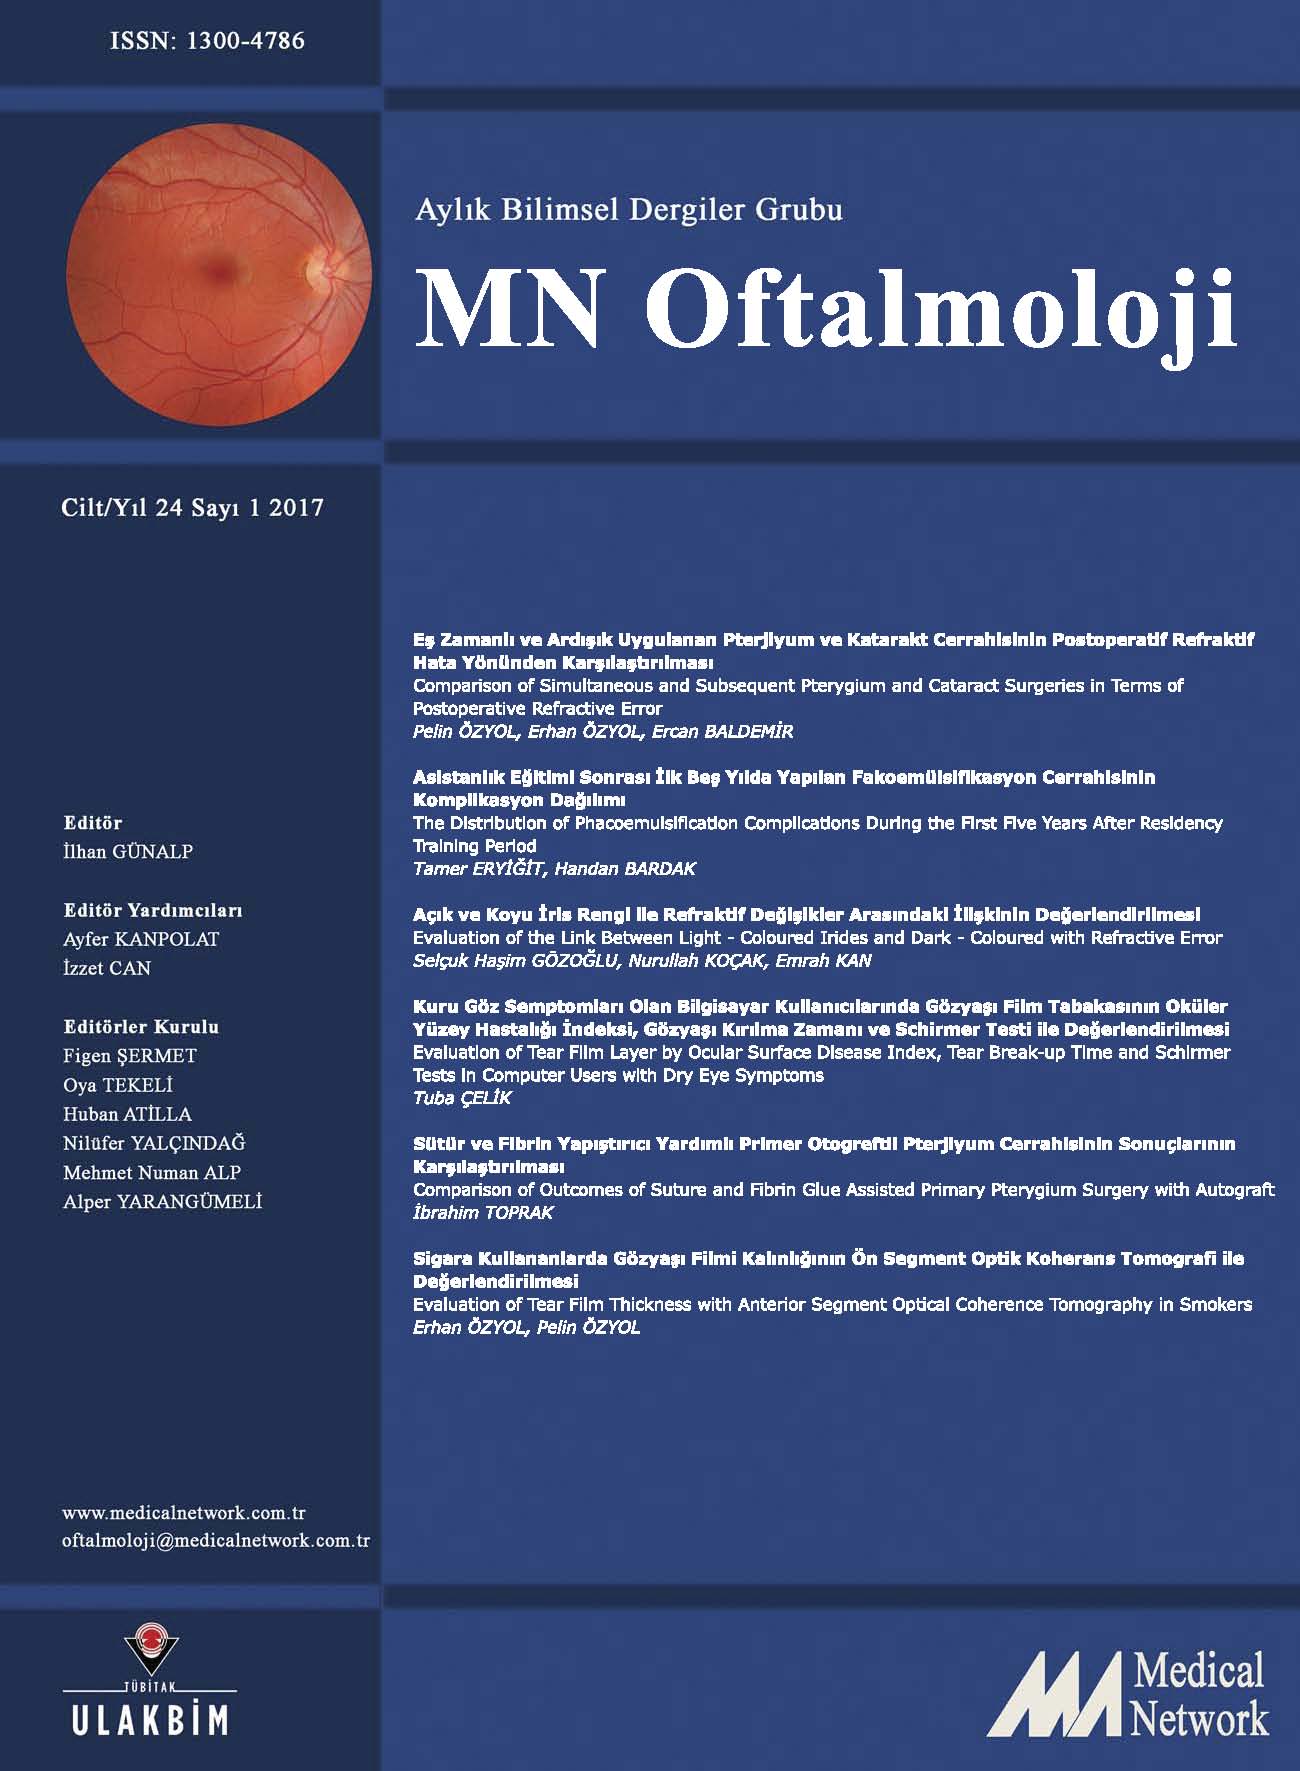 <p>MN Oftalmoloji Cilt: 24 Say: 1 2017 (MN Ophthalmology Volume: 24 No 1 2017)</p>